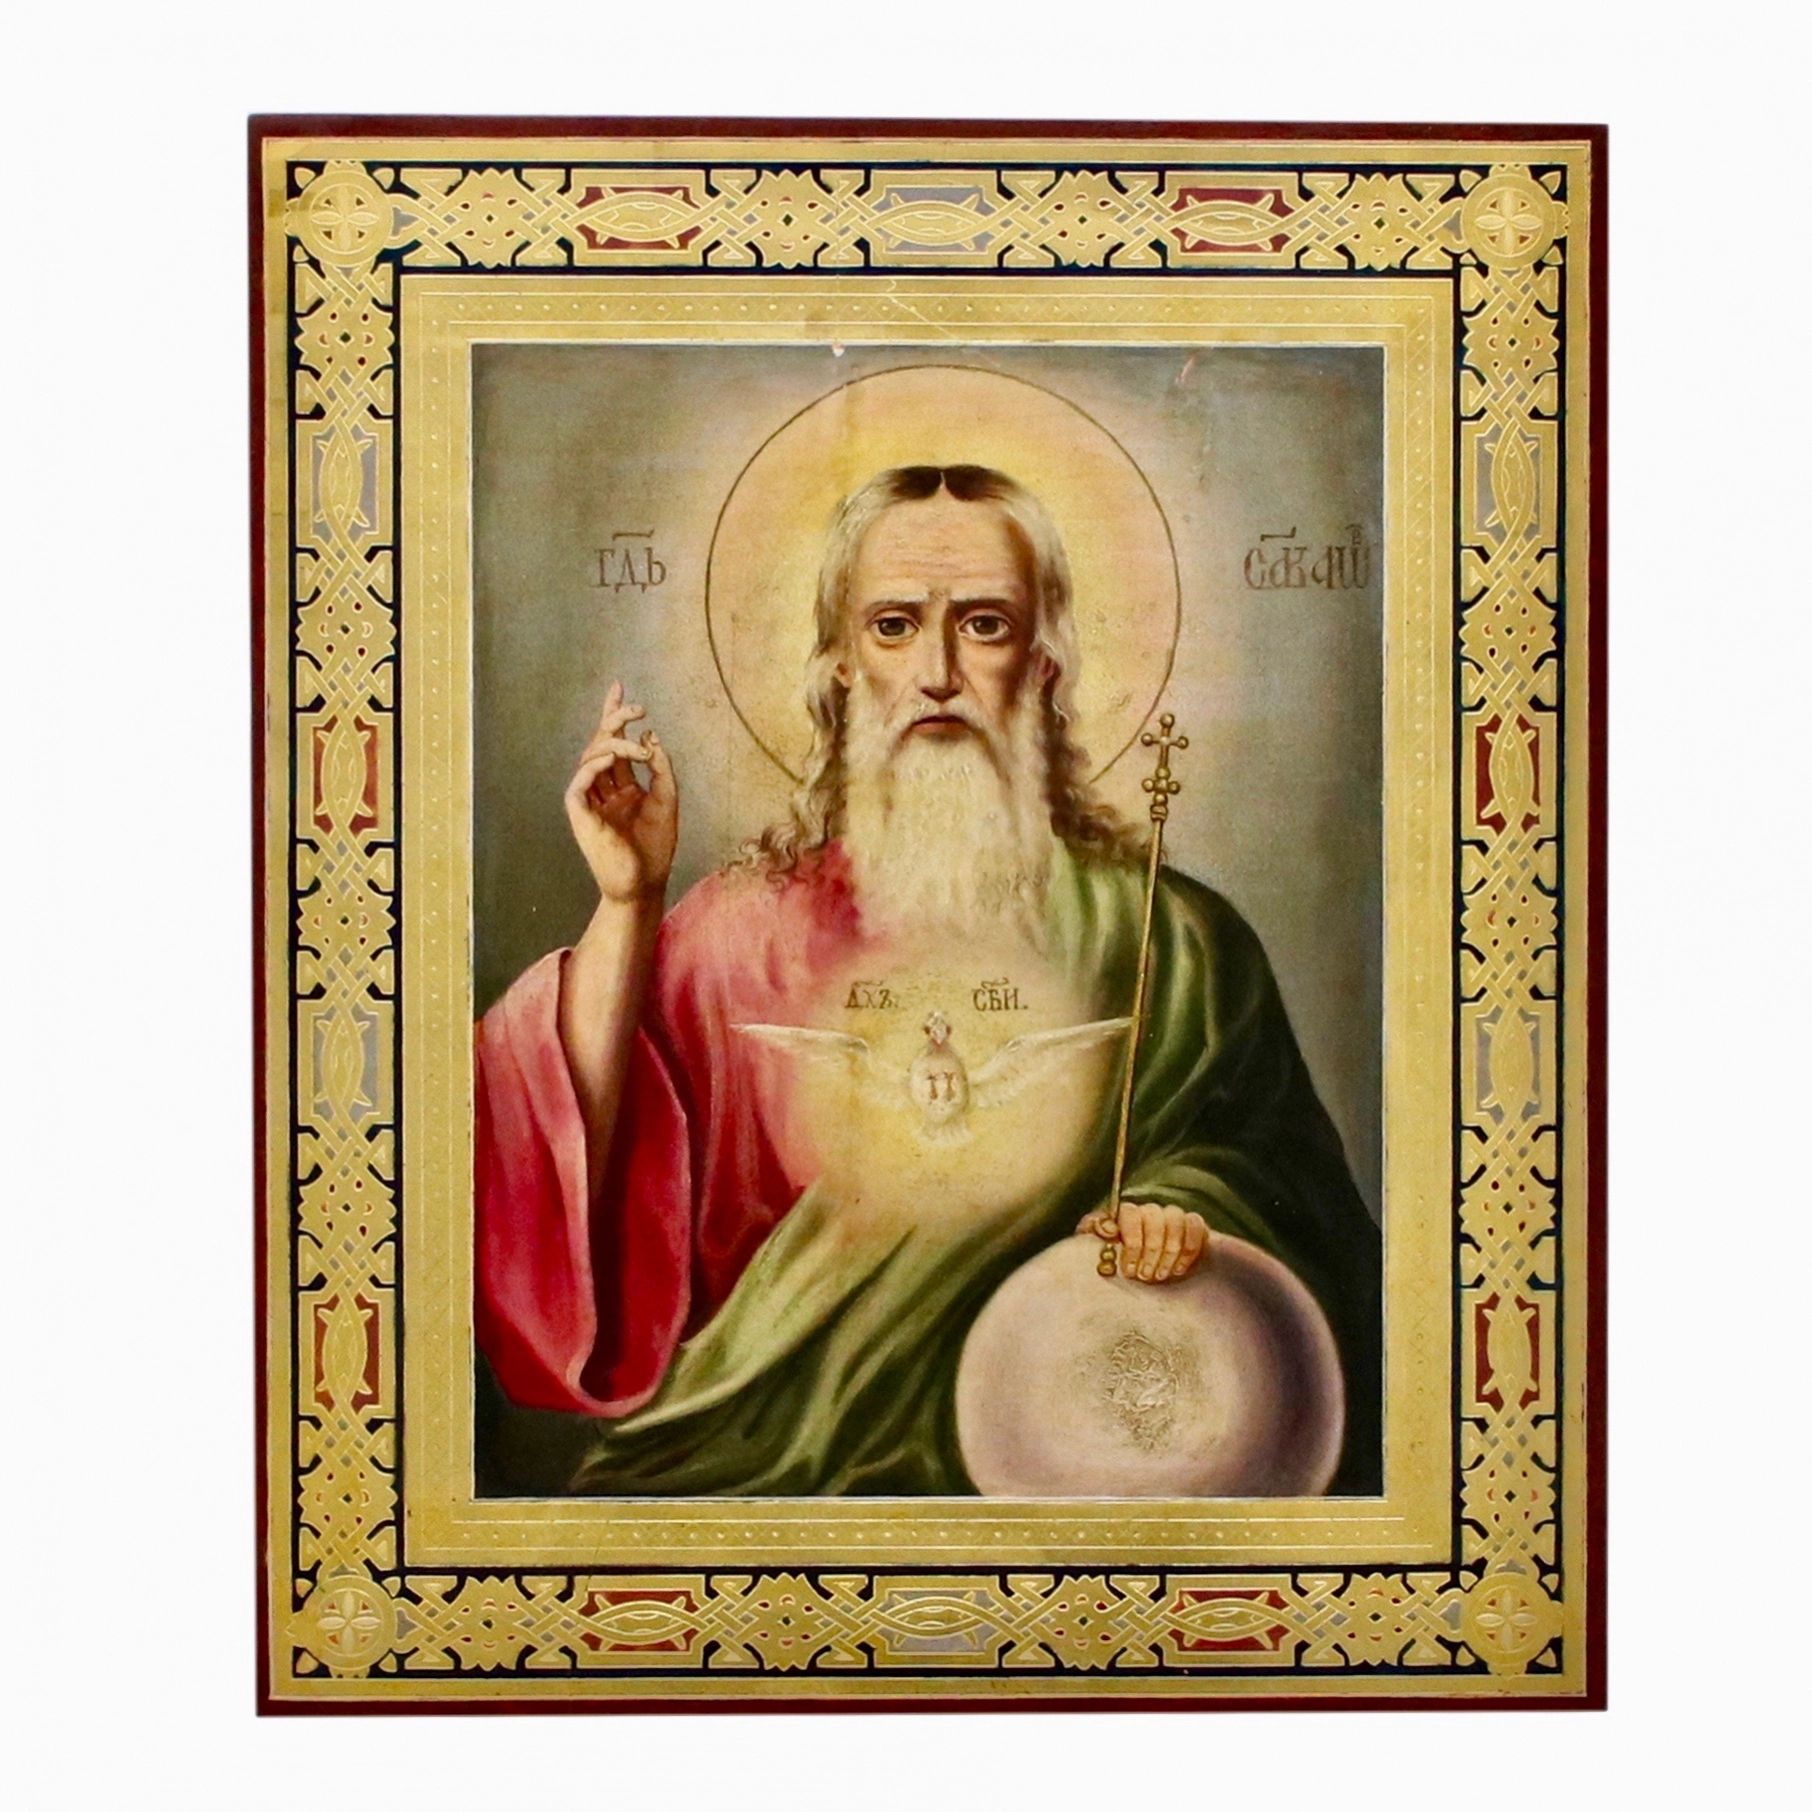 ikona-gospodj-savaofkonec-19-veka